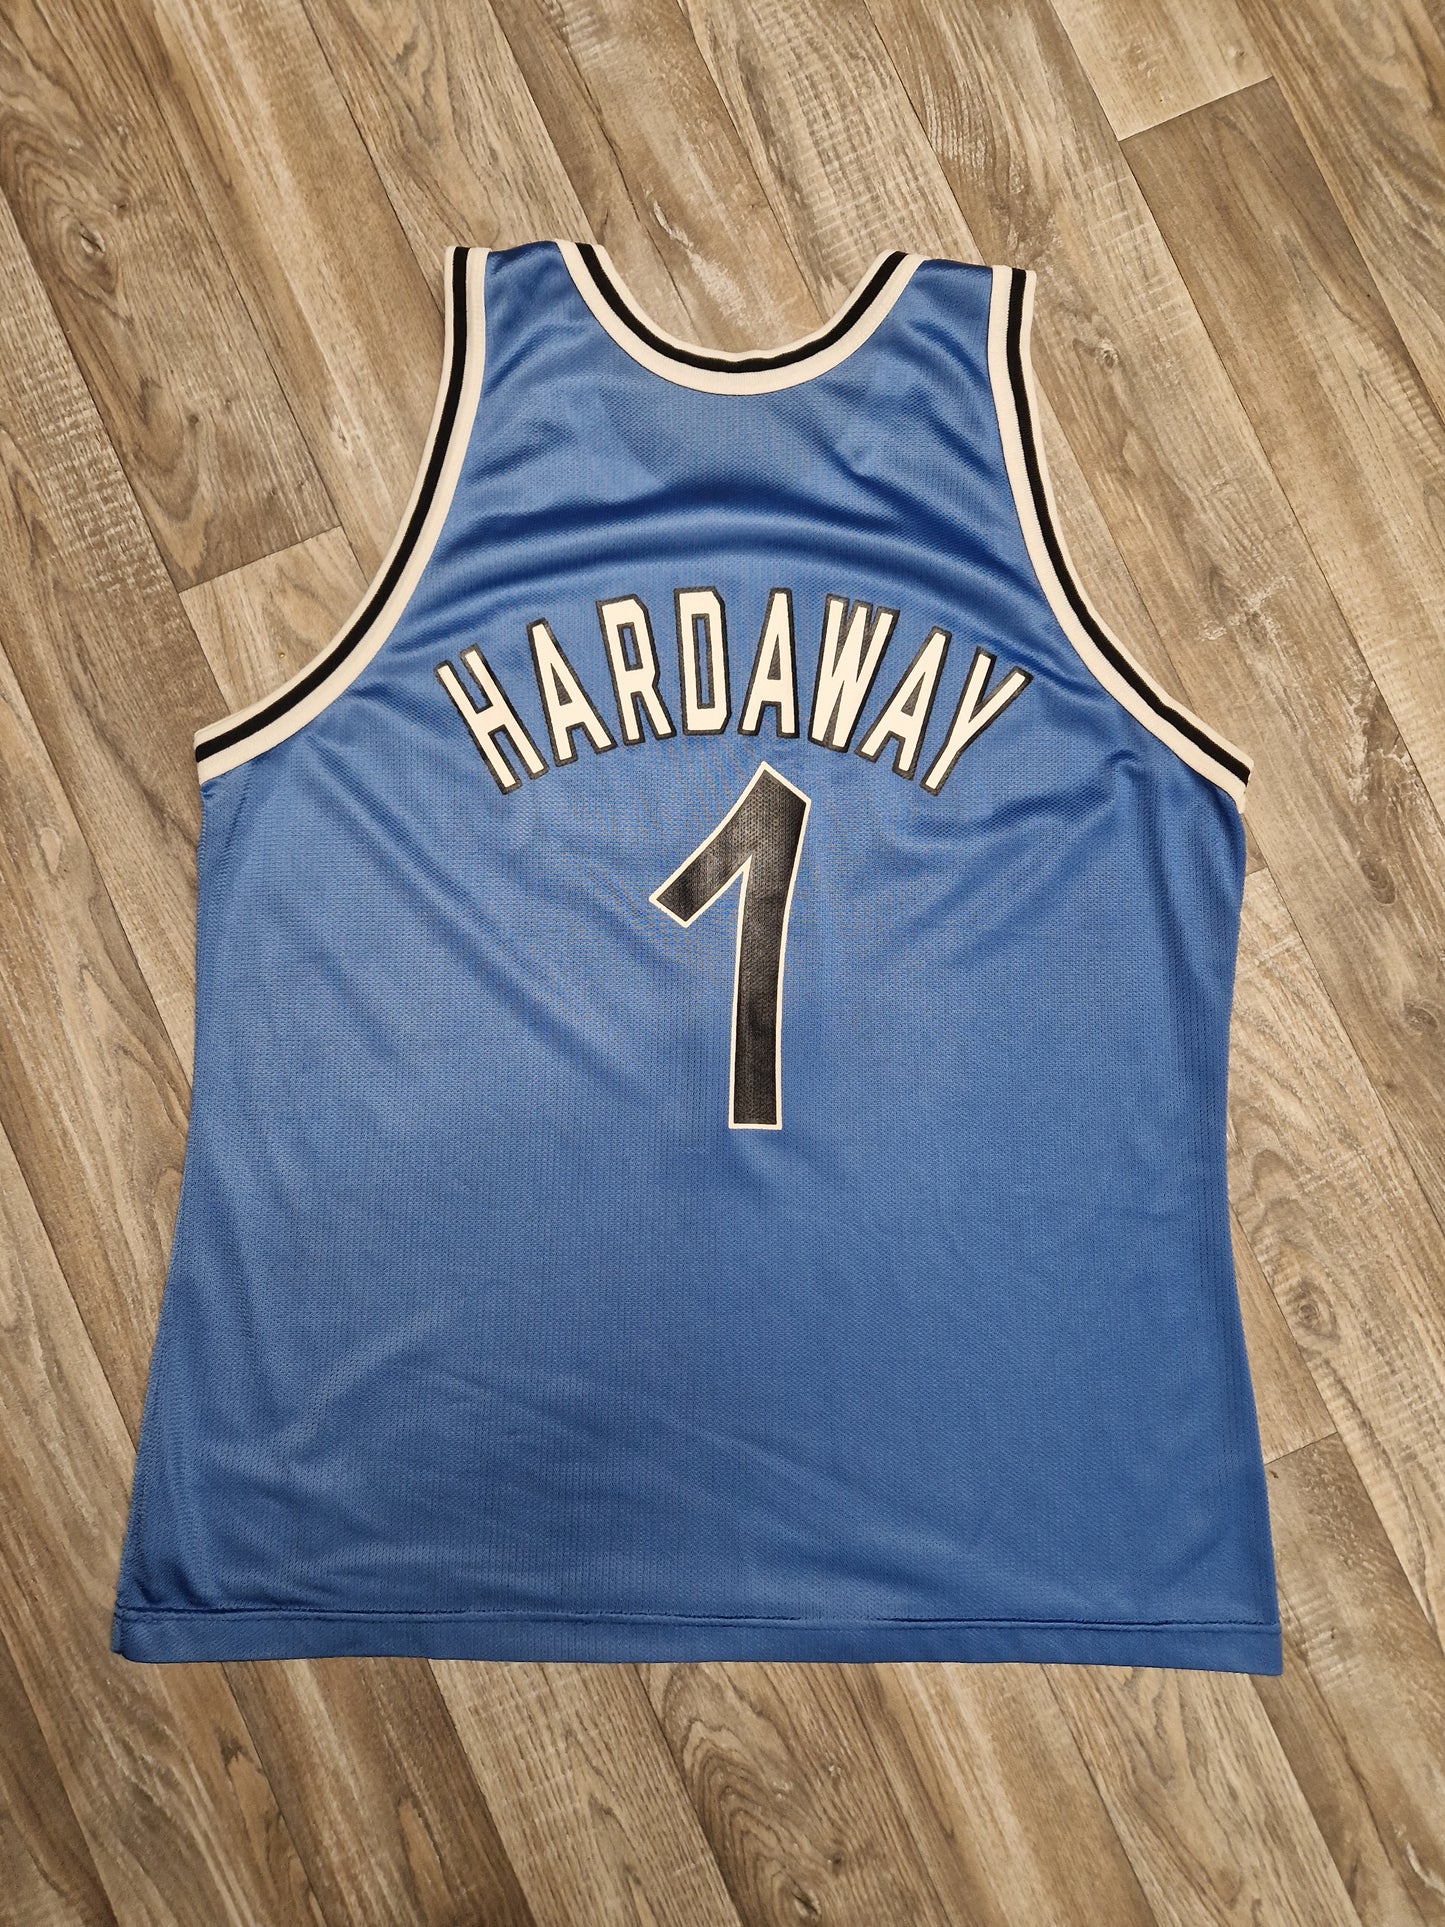 Penny Hardaway Orlando Magic Jersey Size XL